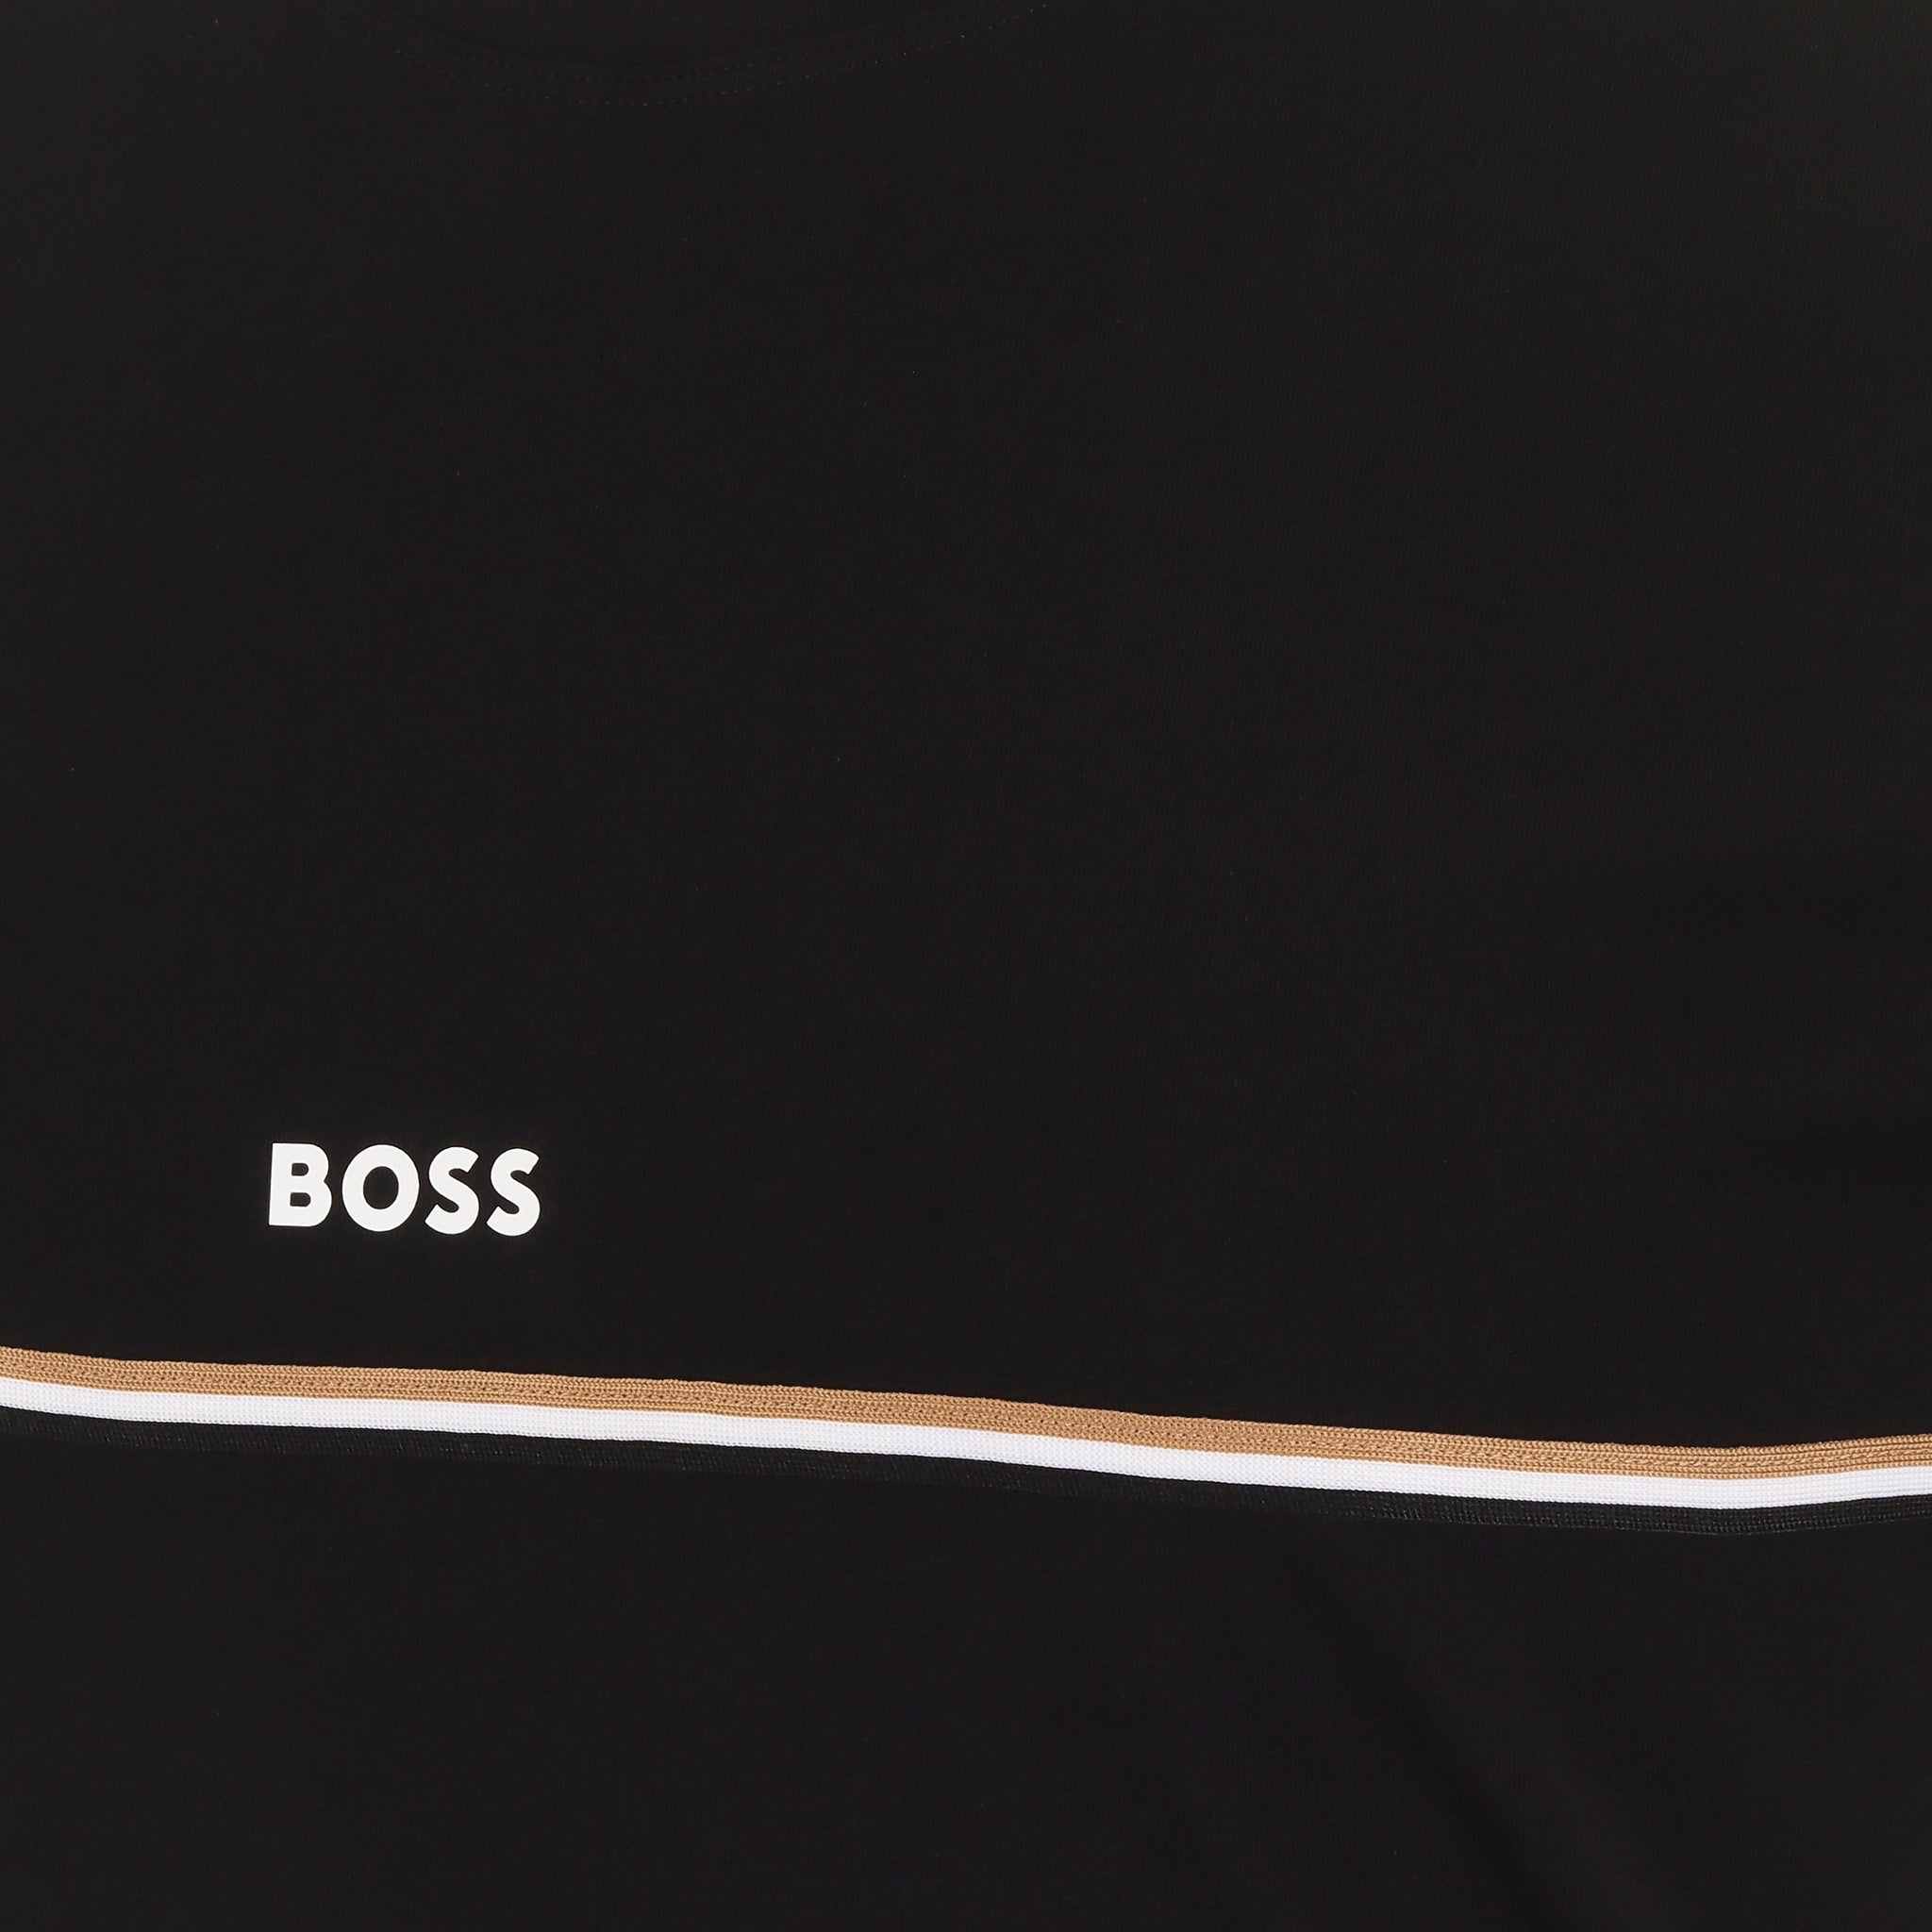 BOSS Signature Stripe Tee Shirt